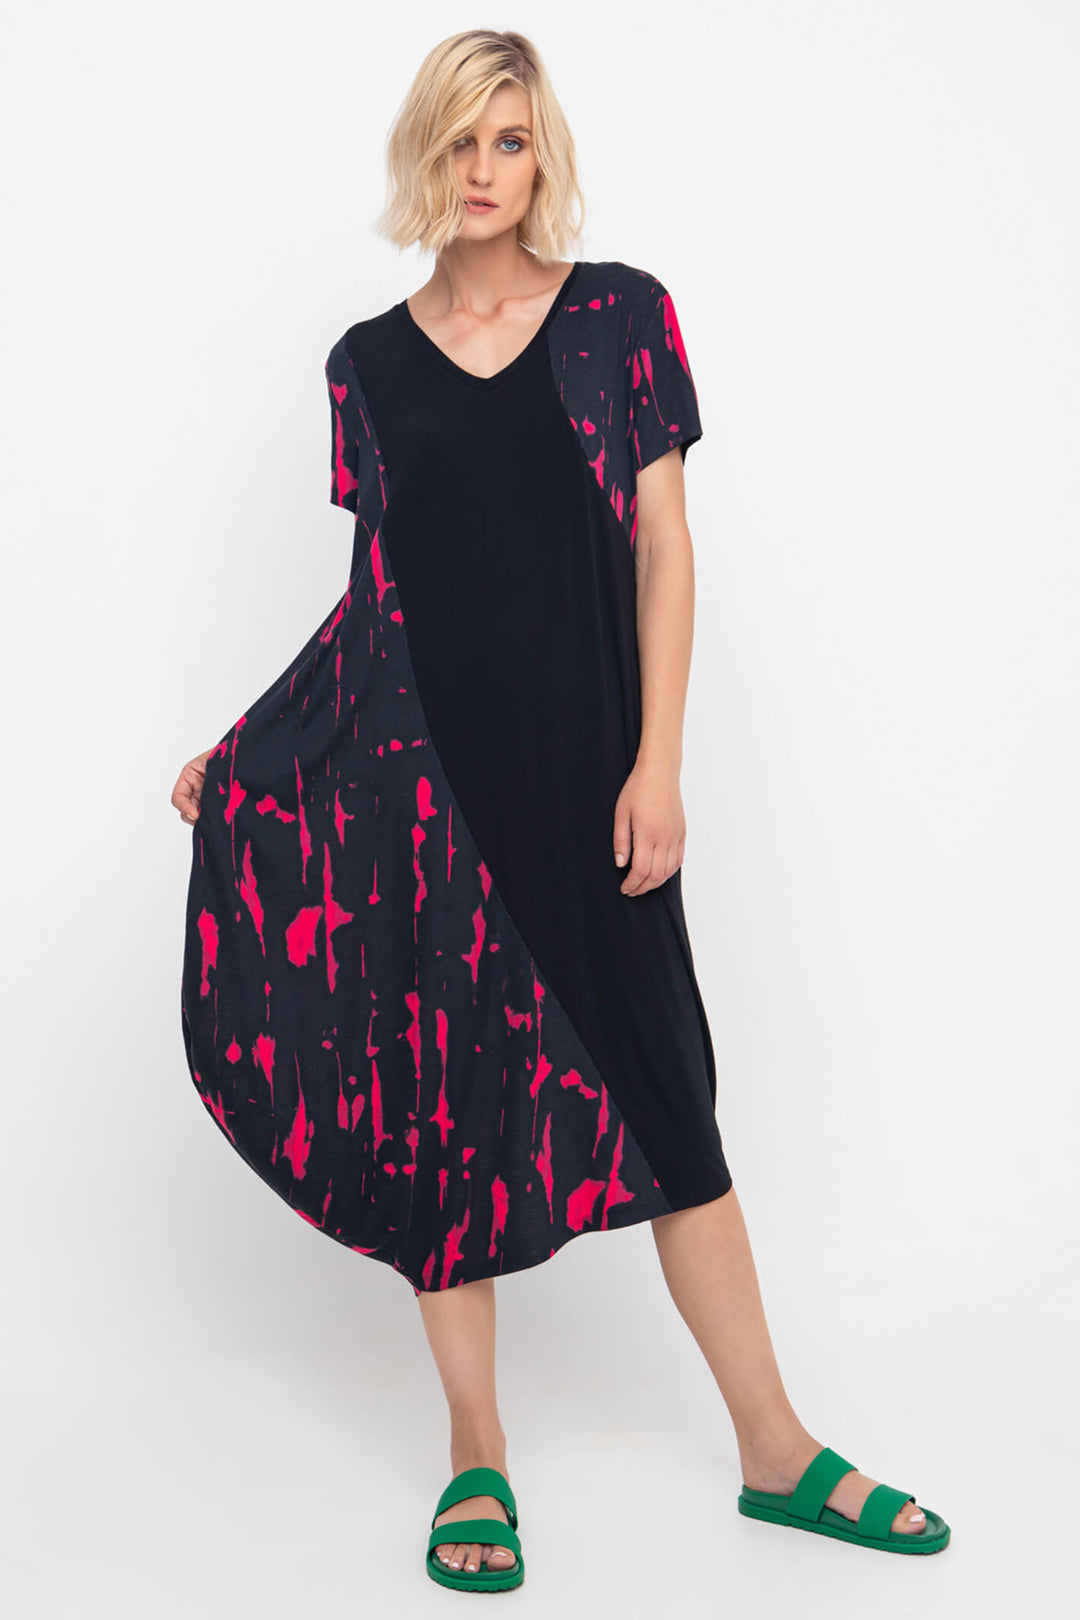 Ozai N Ku R22-251 Black Rosewater Pink Print Dress - Experience Boutique